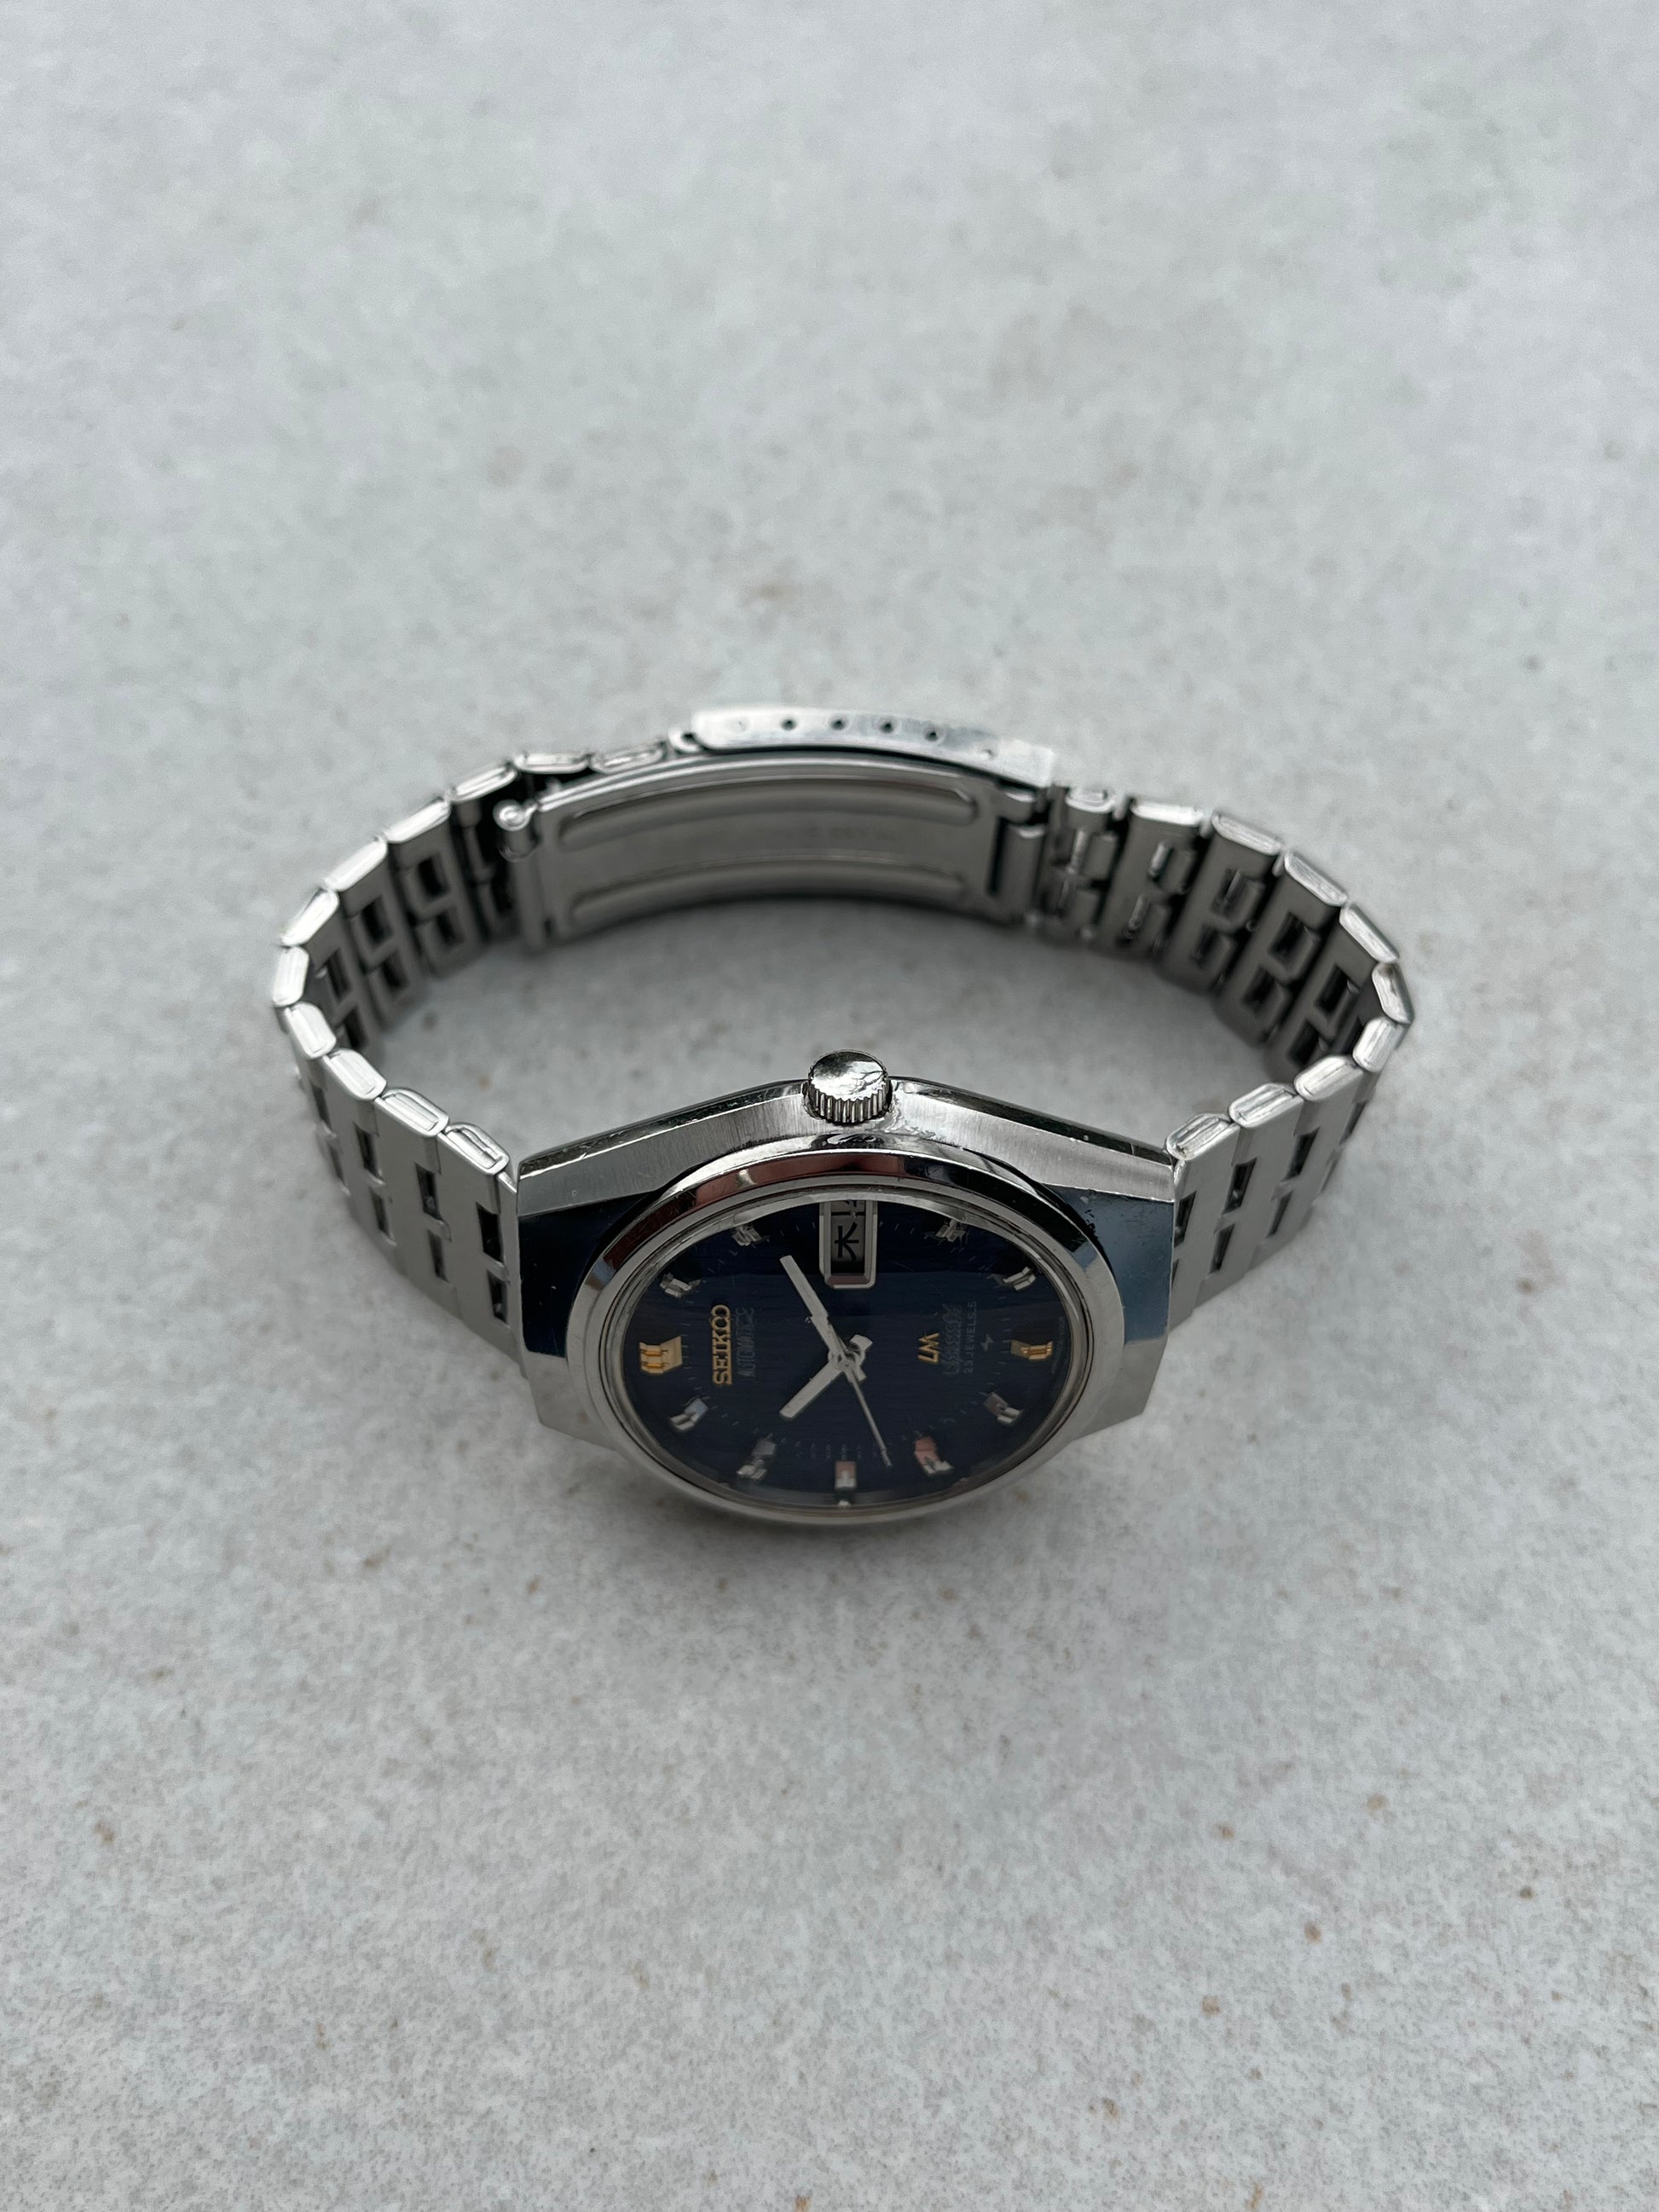 Seiko Lord Matic JDM Japanese Day-Date 5206-6100 – The Wrist Watcher